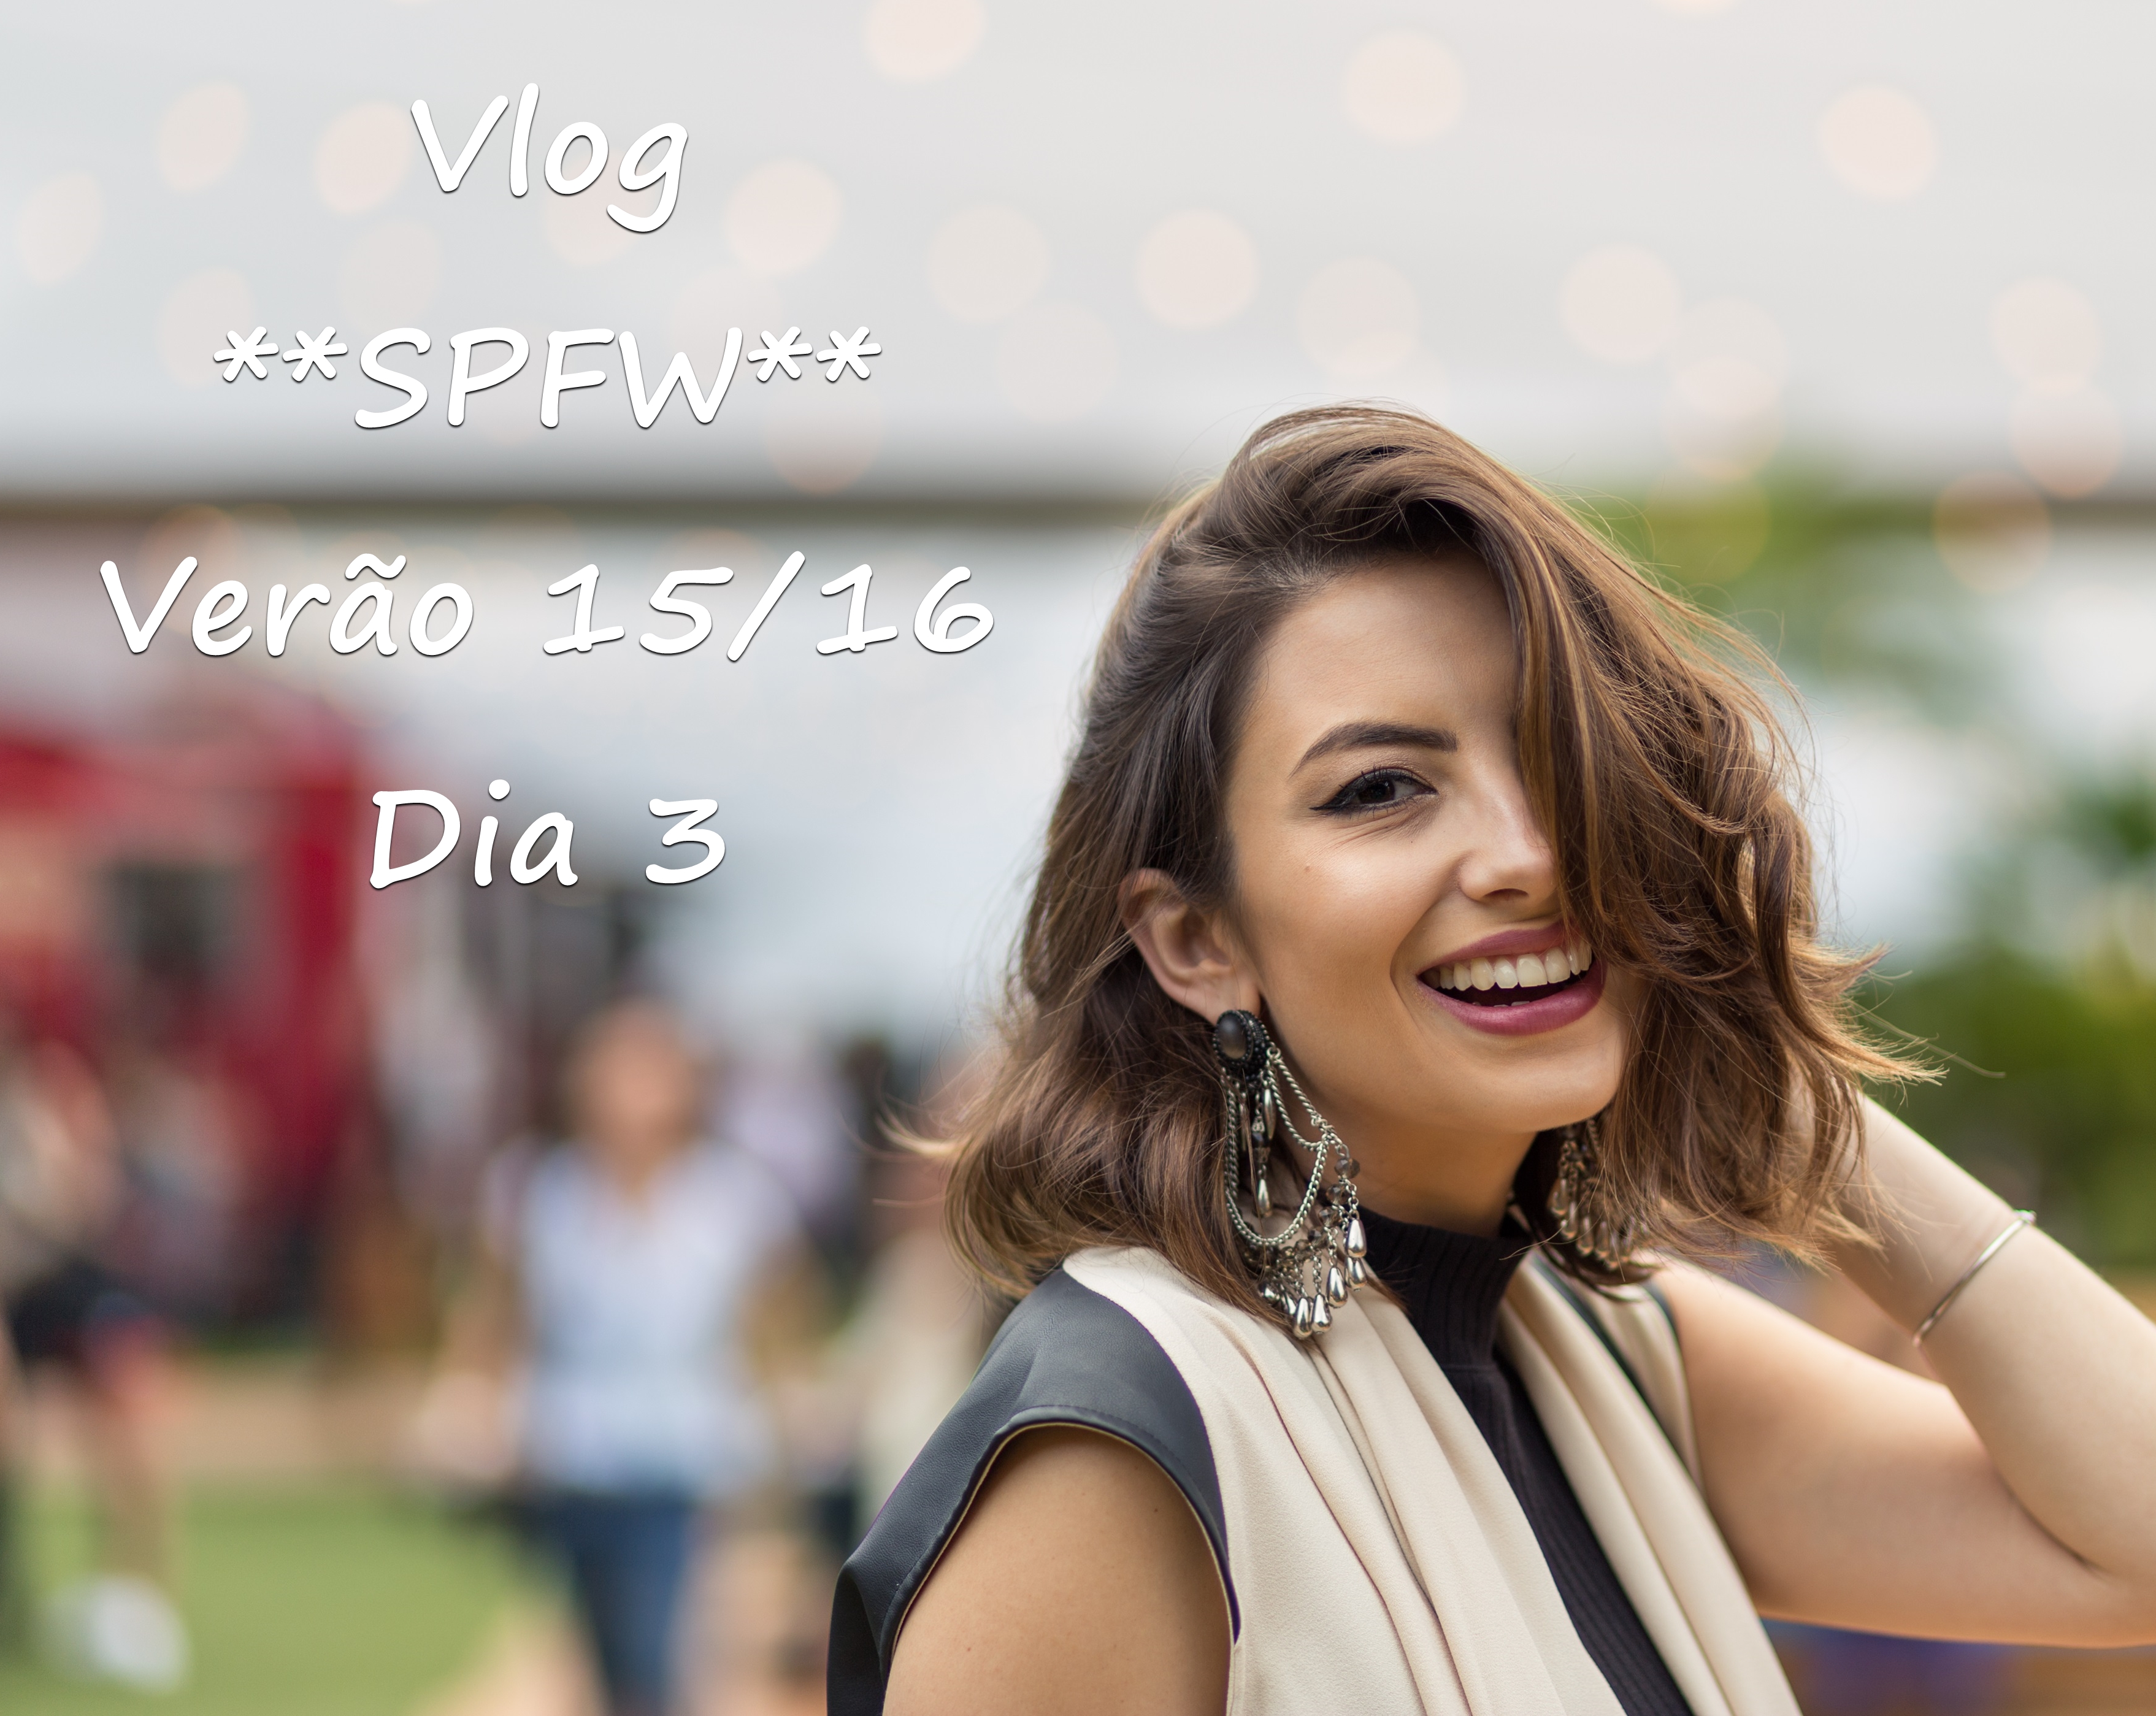 vlog-spfw-verao-15-16-blog-vanduarte-ronaldo-fraga-gisele-Bundchen-salinas-CAPA